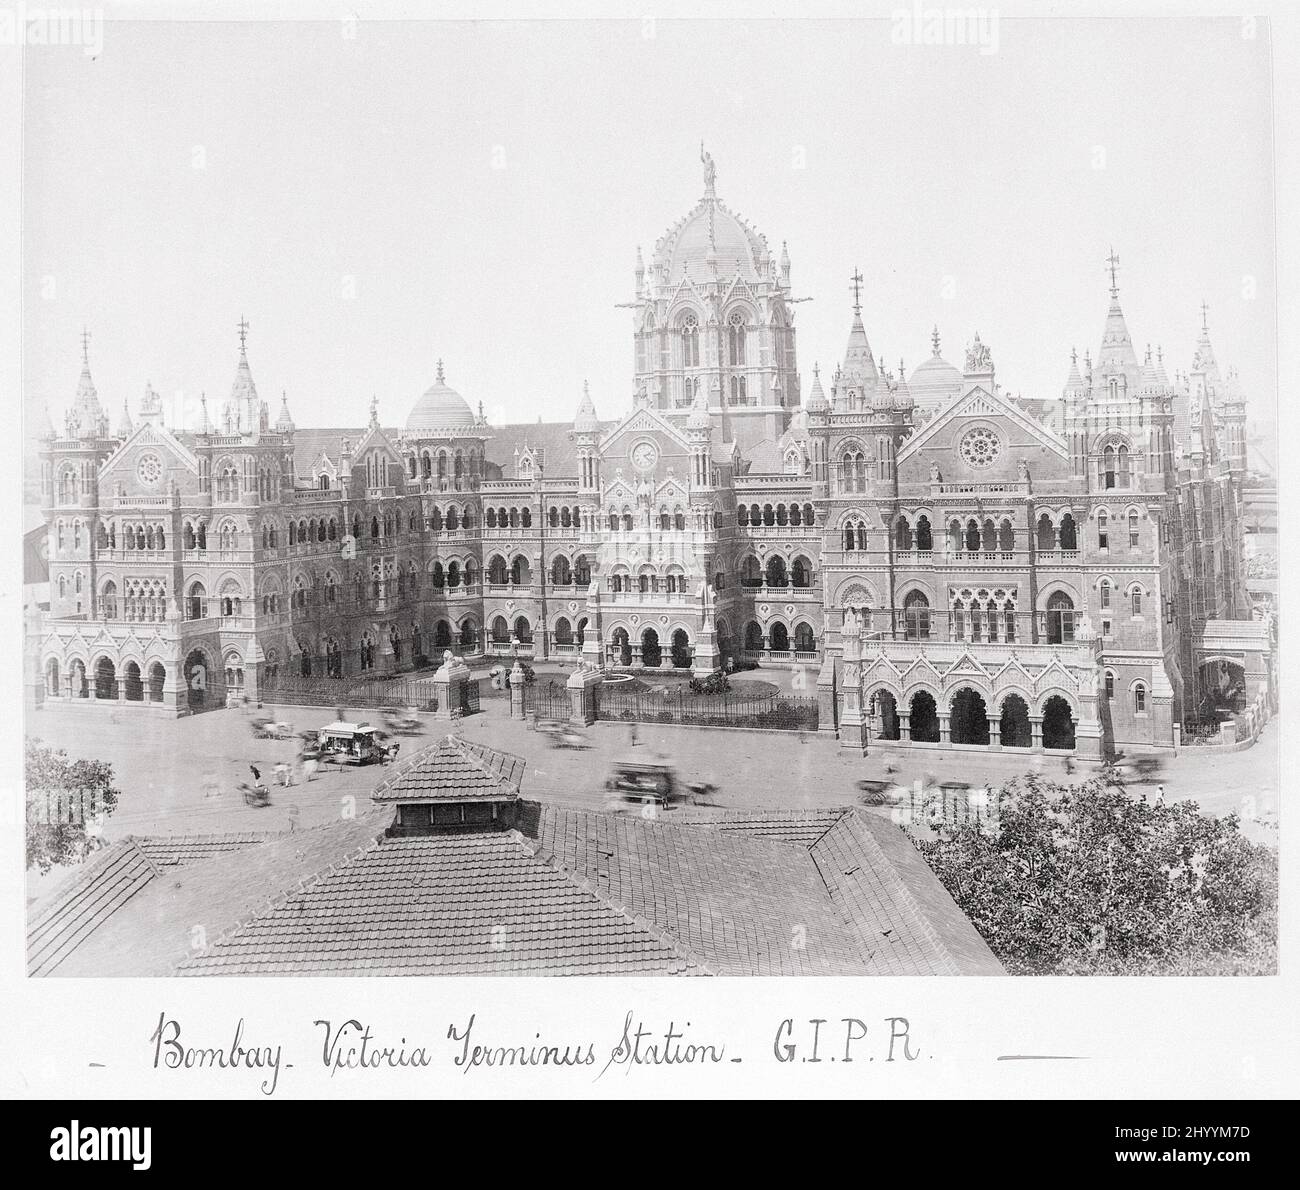 Bombay, Victoria Terminus Station - G.I.P.R. Samuel Bourne (Inghilterra, 1834-1912, India attiva, 1863-1870). Inghilterra, fine 1860s. Fotografie. Stampa in argento albume Foto Stock